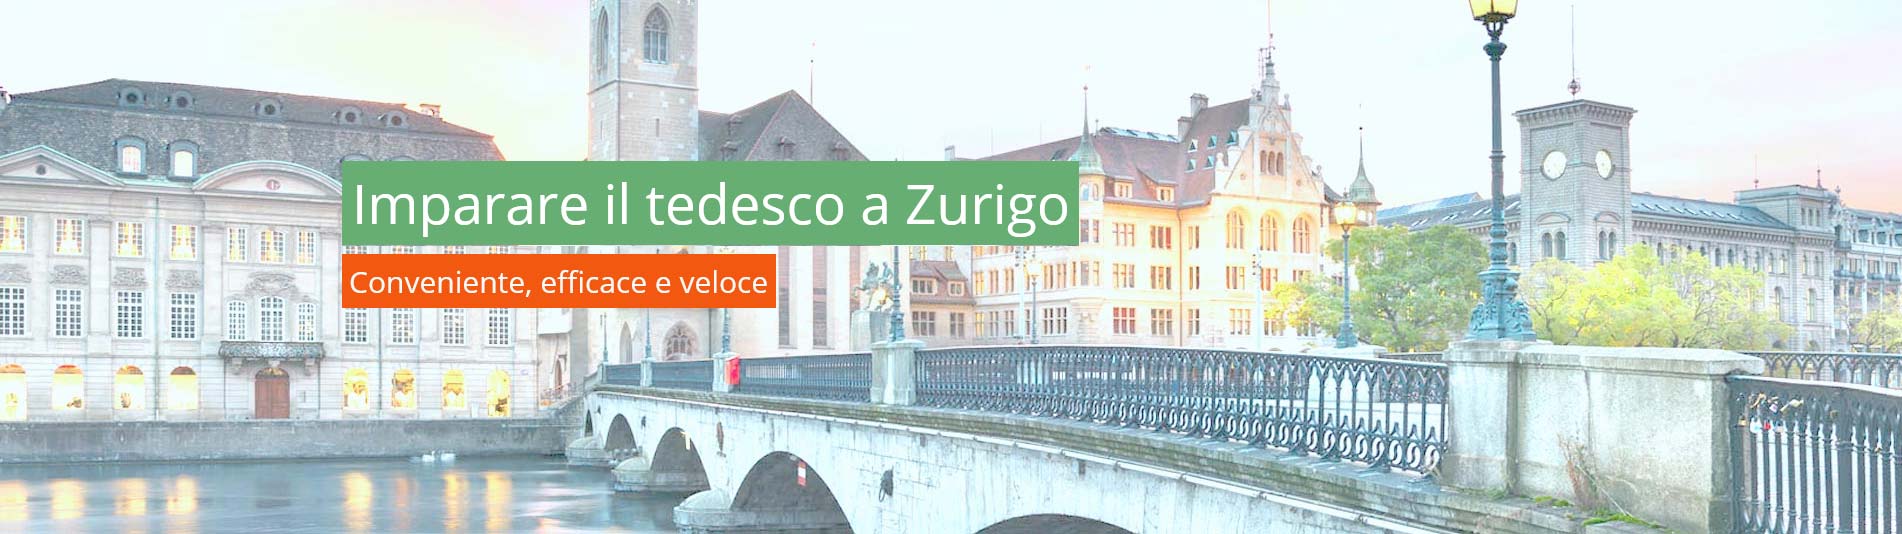 Corso di tedesco a Zurigo – Scuola di lingue per corsi di tedesco